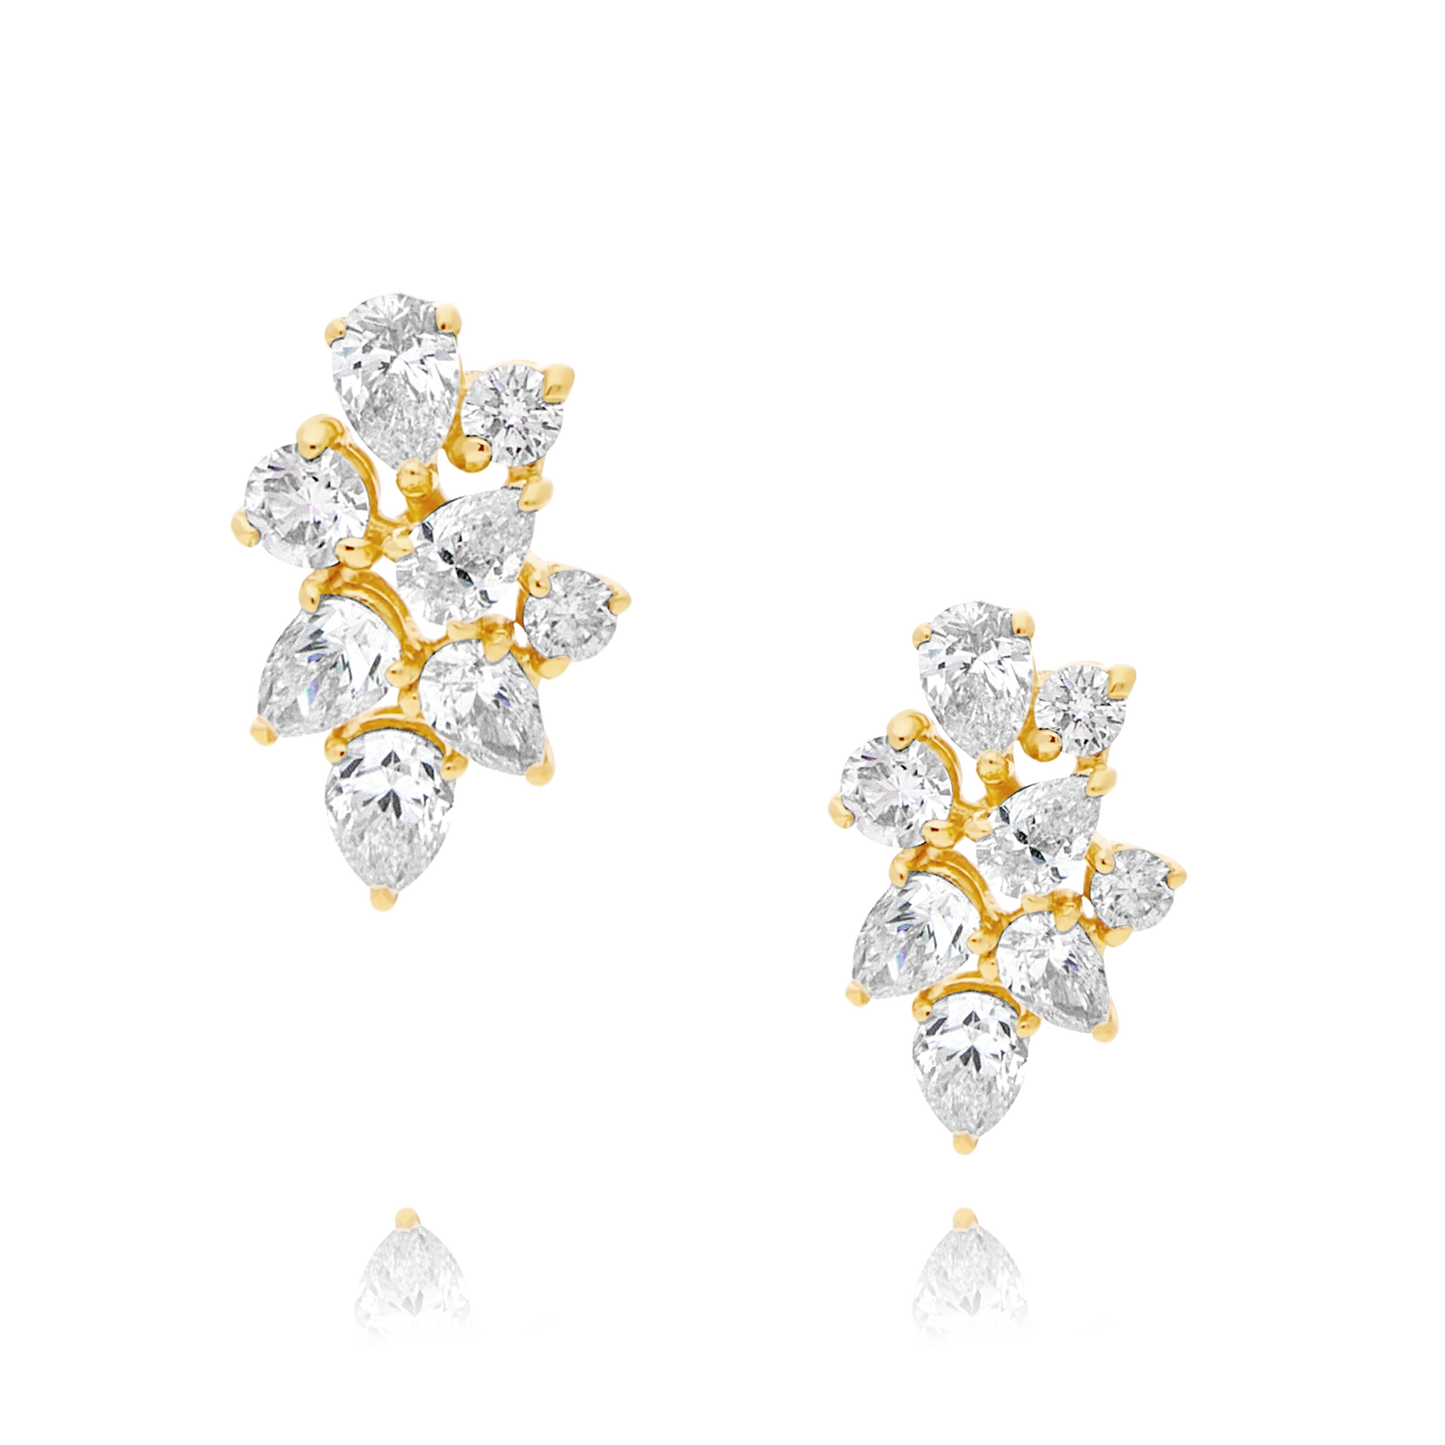 18ct Diamond Earrings